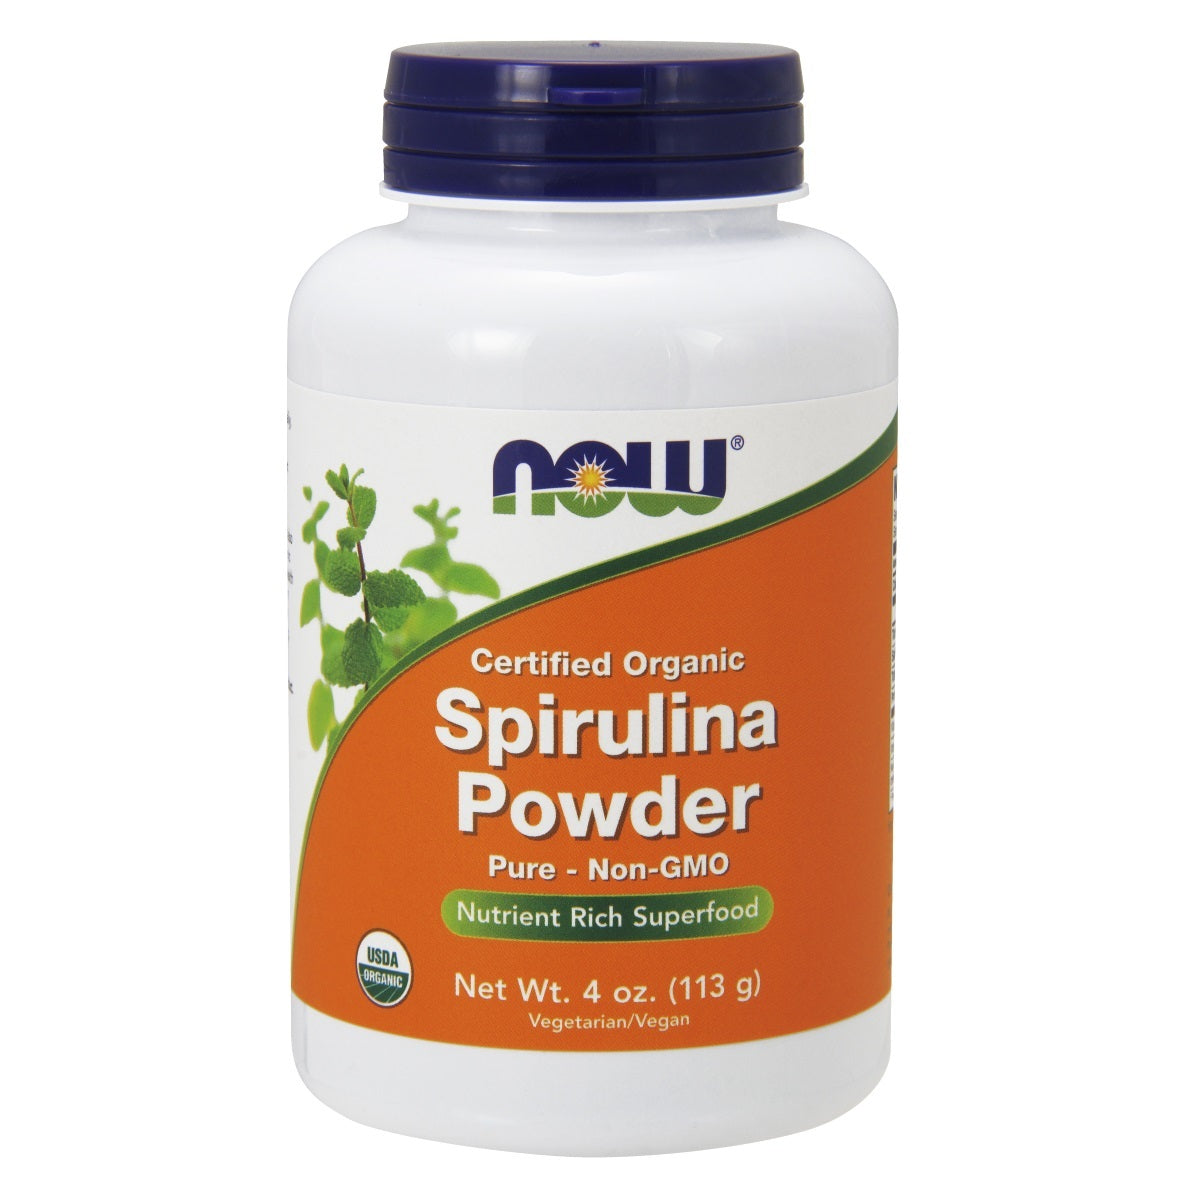 Primary image of Spirulina Powder